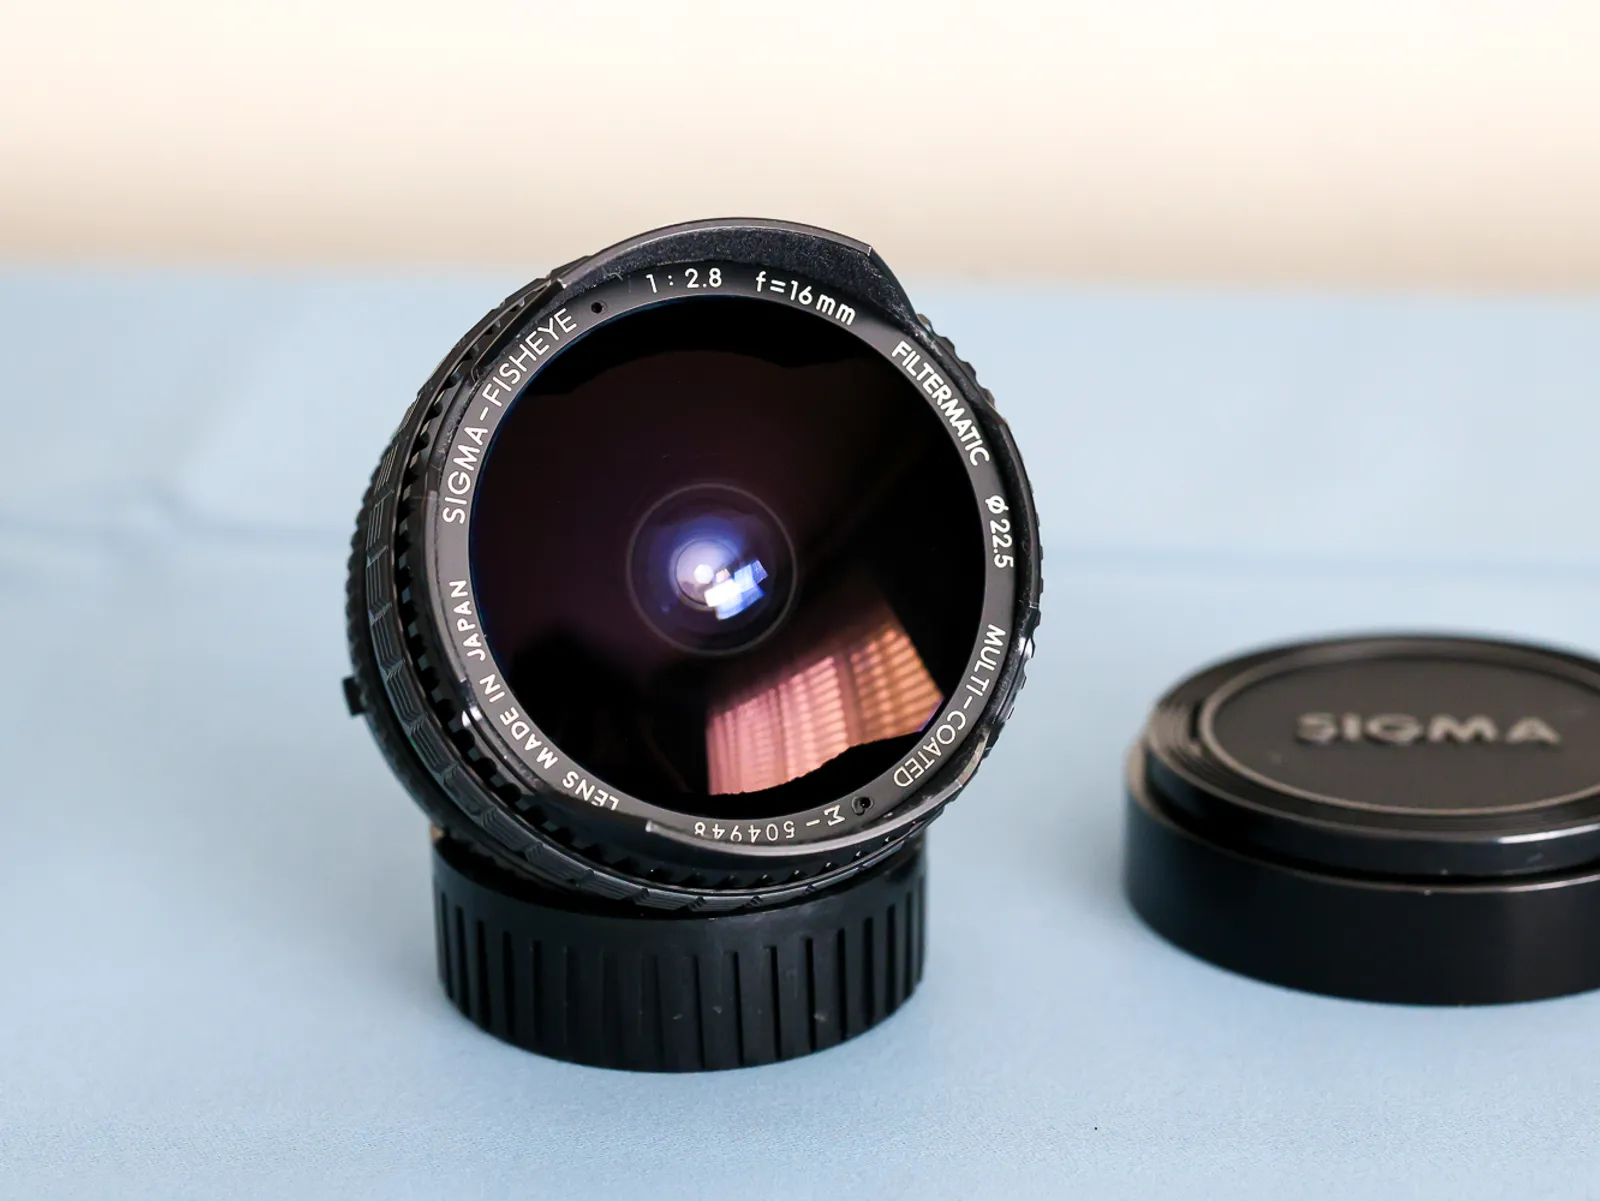 Sigma 16mm 2.8 filtermatic fisheye lens for Nikon F